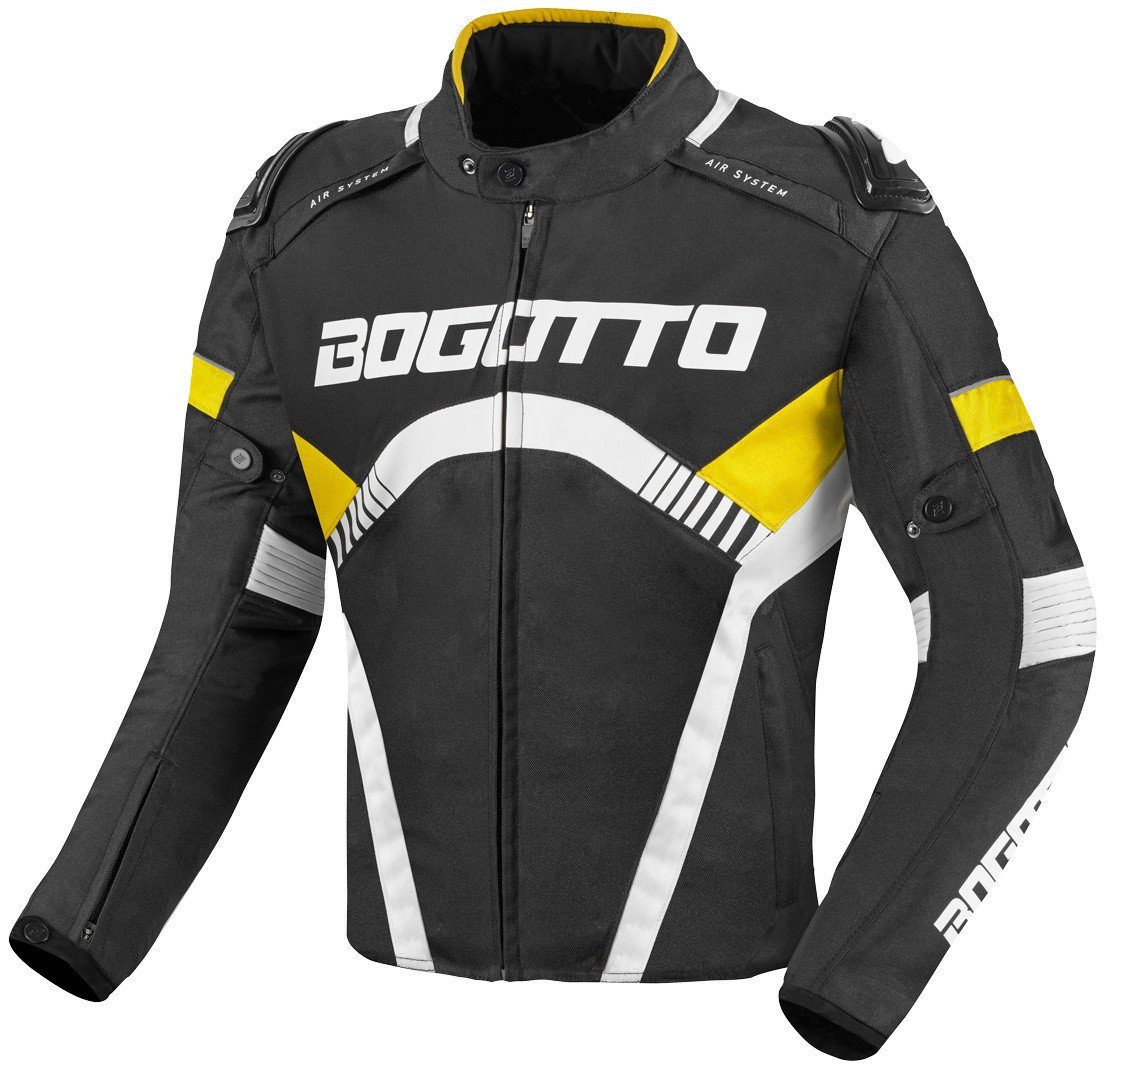 Bogotto Motorradjacke Boomerang wasserdichte Black/Yellow Textiljacke Motorrad